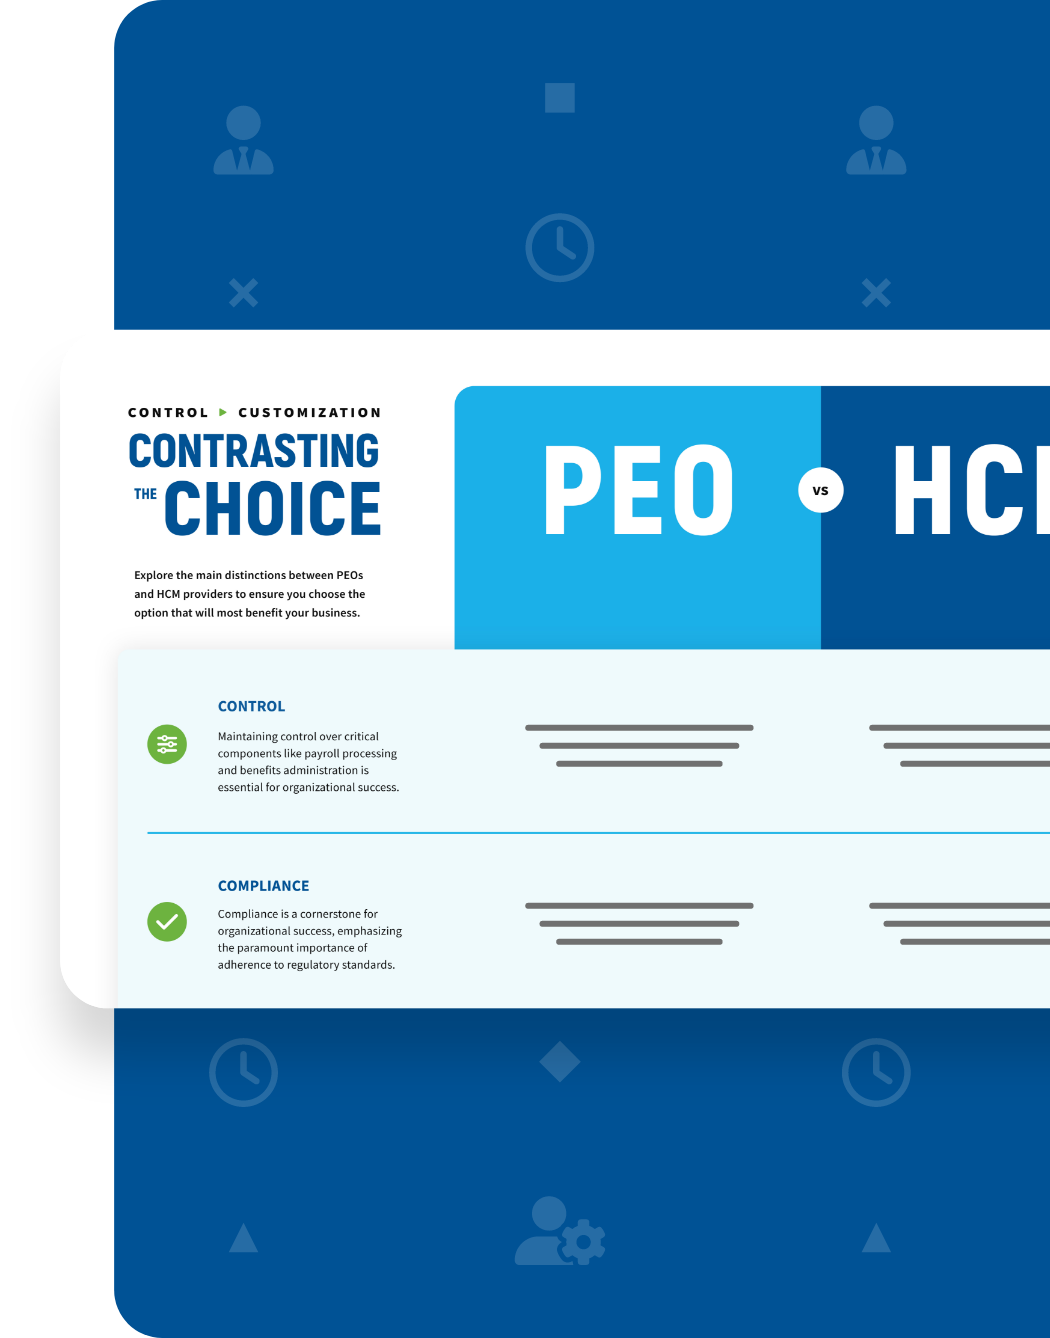 peo-vs-hcm-contrast-infographic-mockup-md